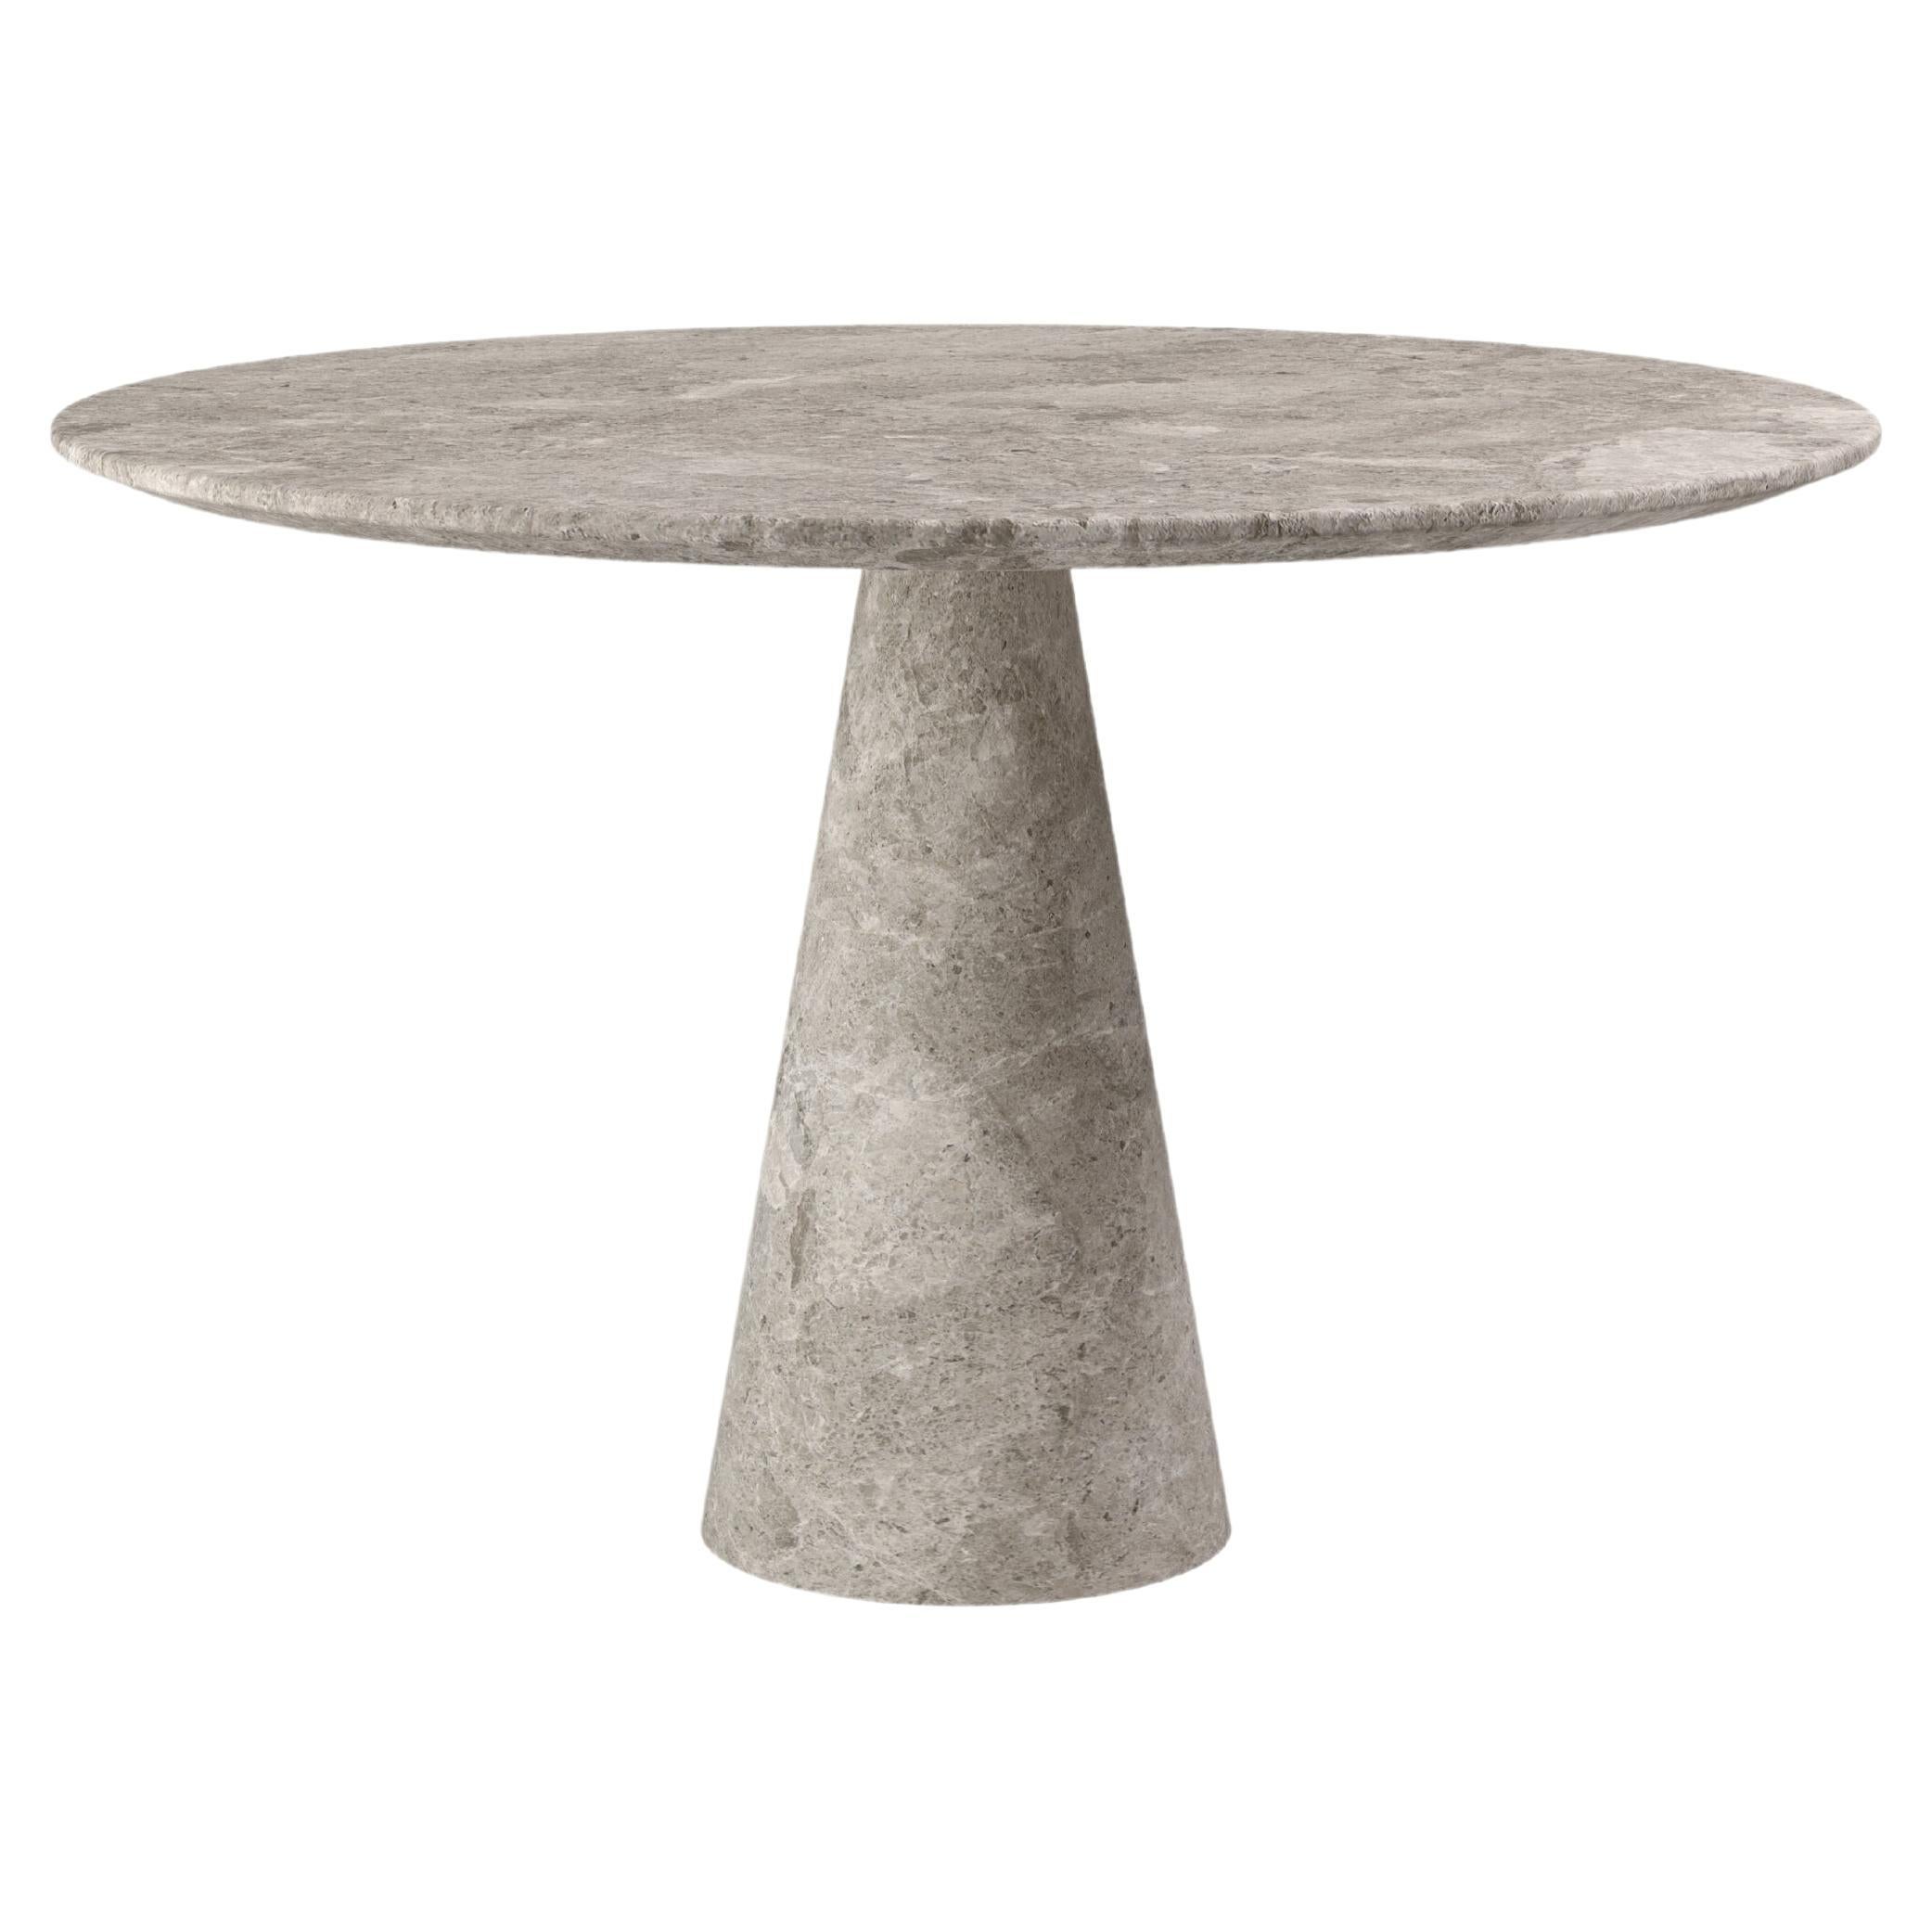 FORM(LA) Cono Round Dining Table 60”L x 60"W x 30”H Tundra Gray Marble For Sale